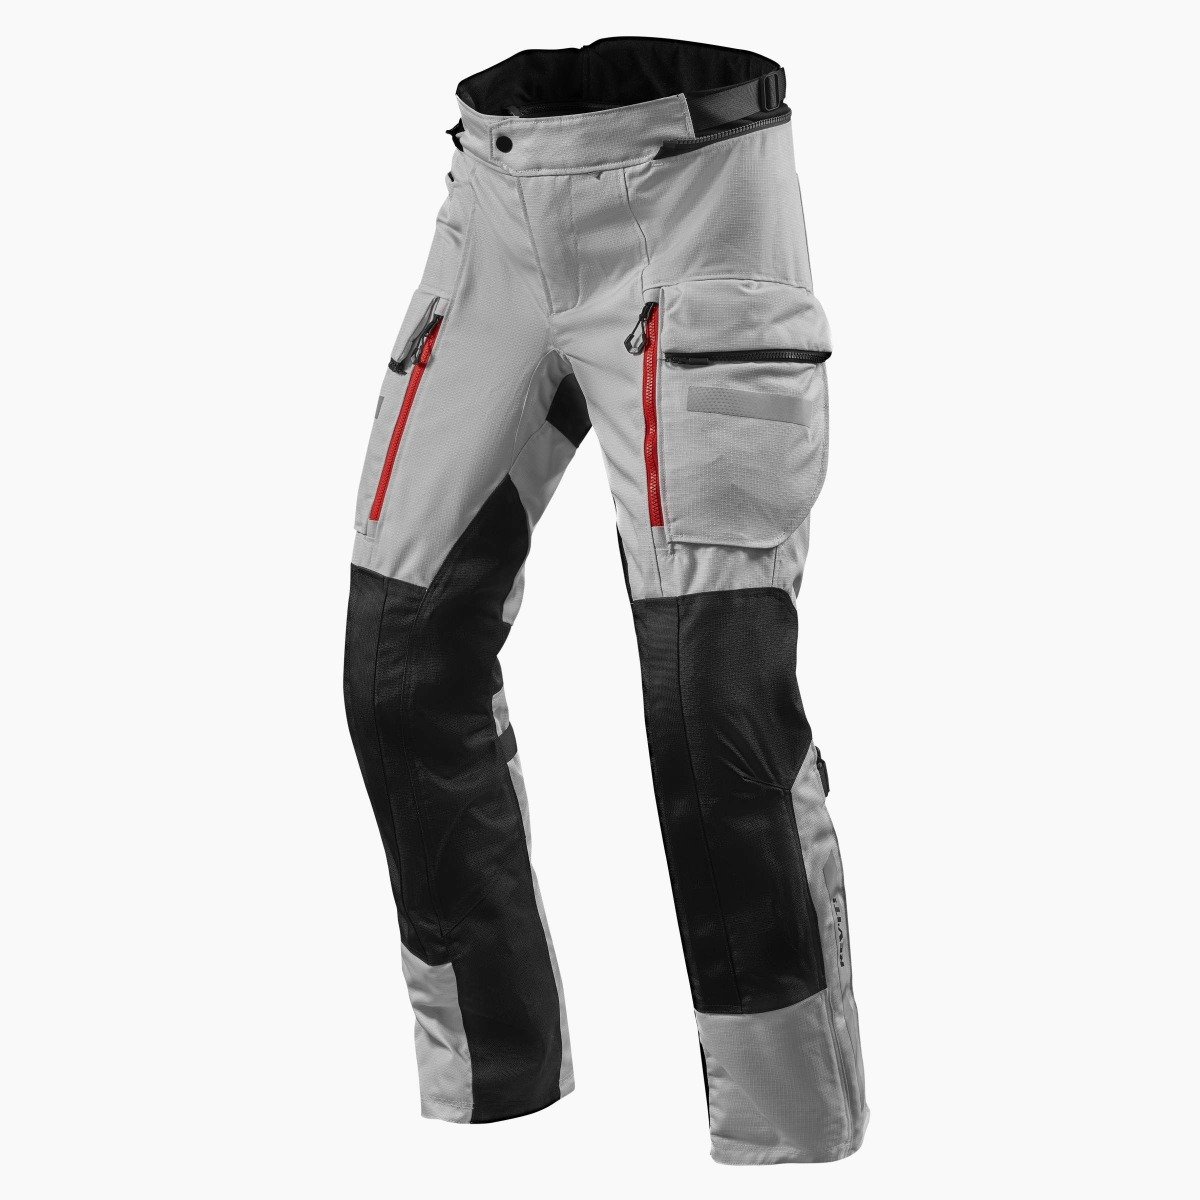 Image of REV'IT! Sand 4 H2O Standard Silver Black Motorcycle Pants Talla M